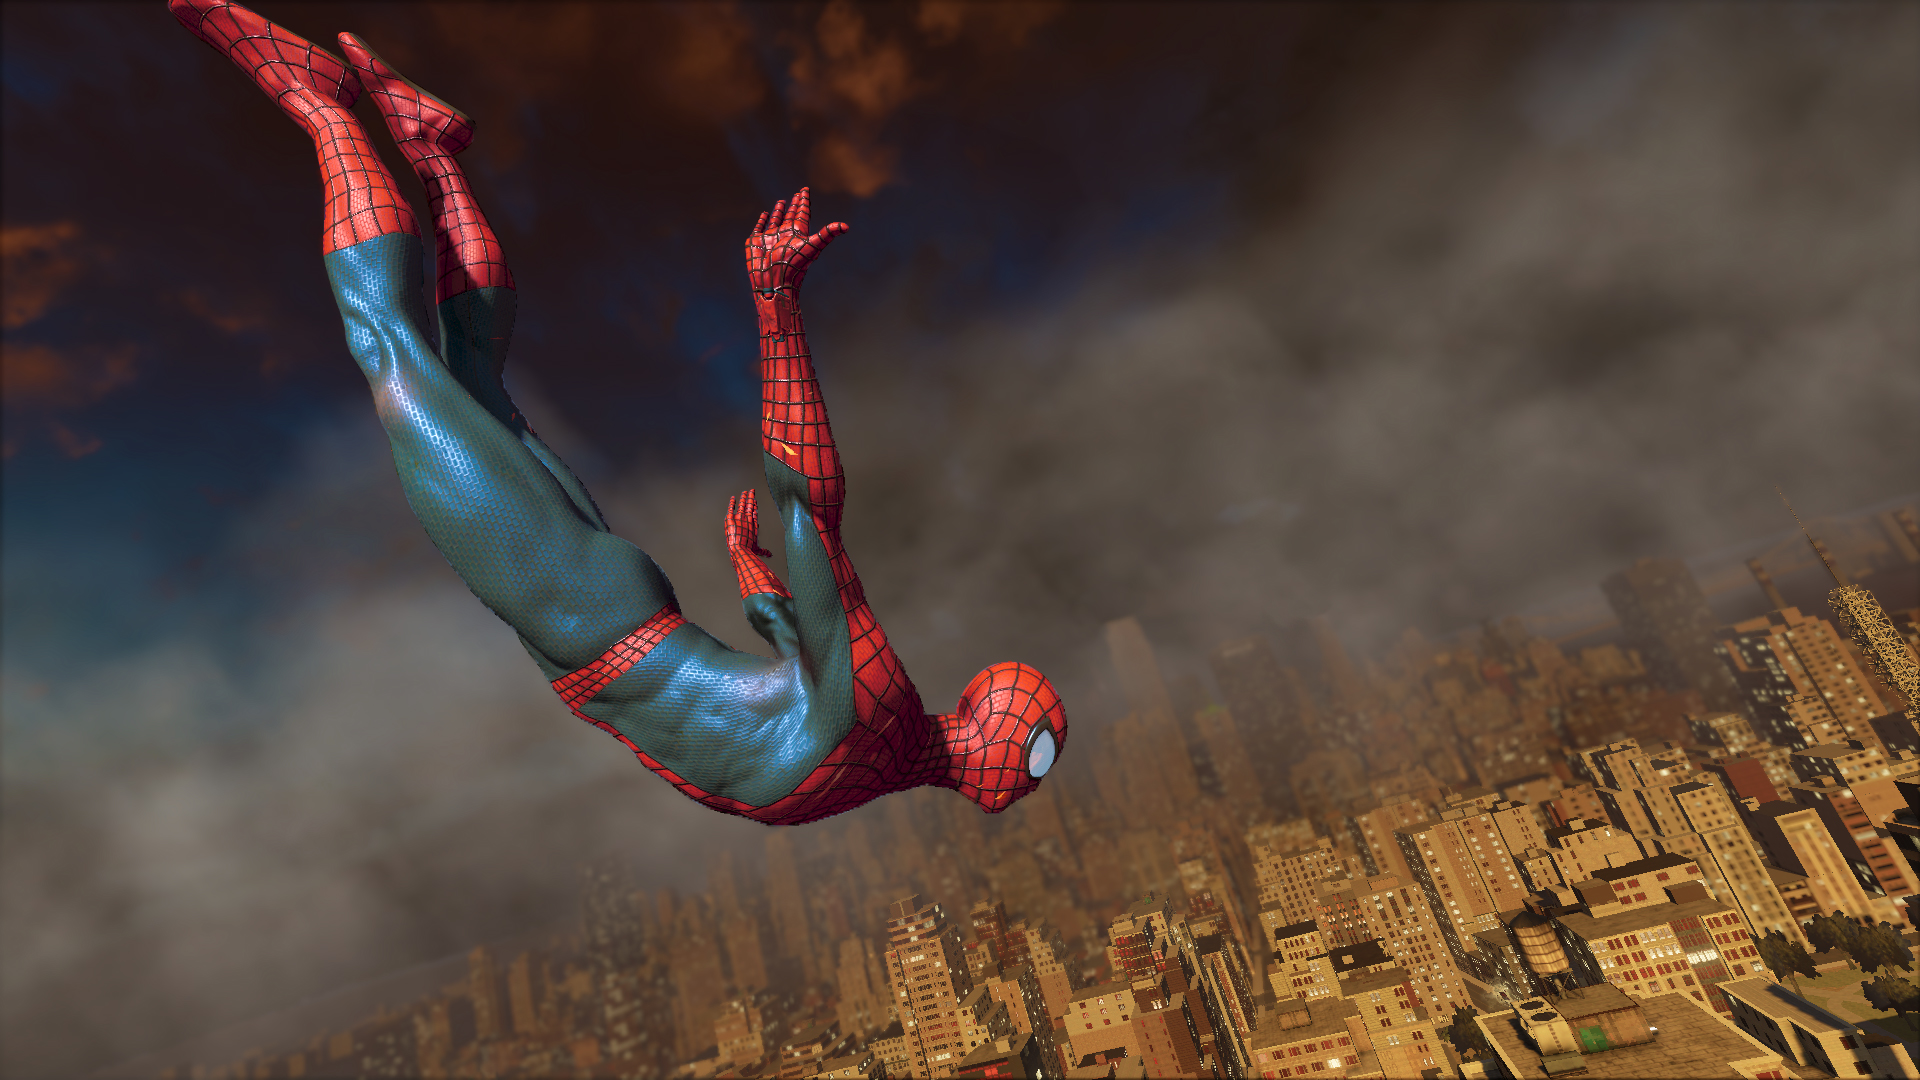 Спайдер ман 2. The amazing Spider-man игра 2014. The amazing Spider-man 2 (игра, 2014). Эмэйзинг Спайдер Мэн 2. Spider man 2014 игра.